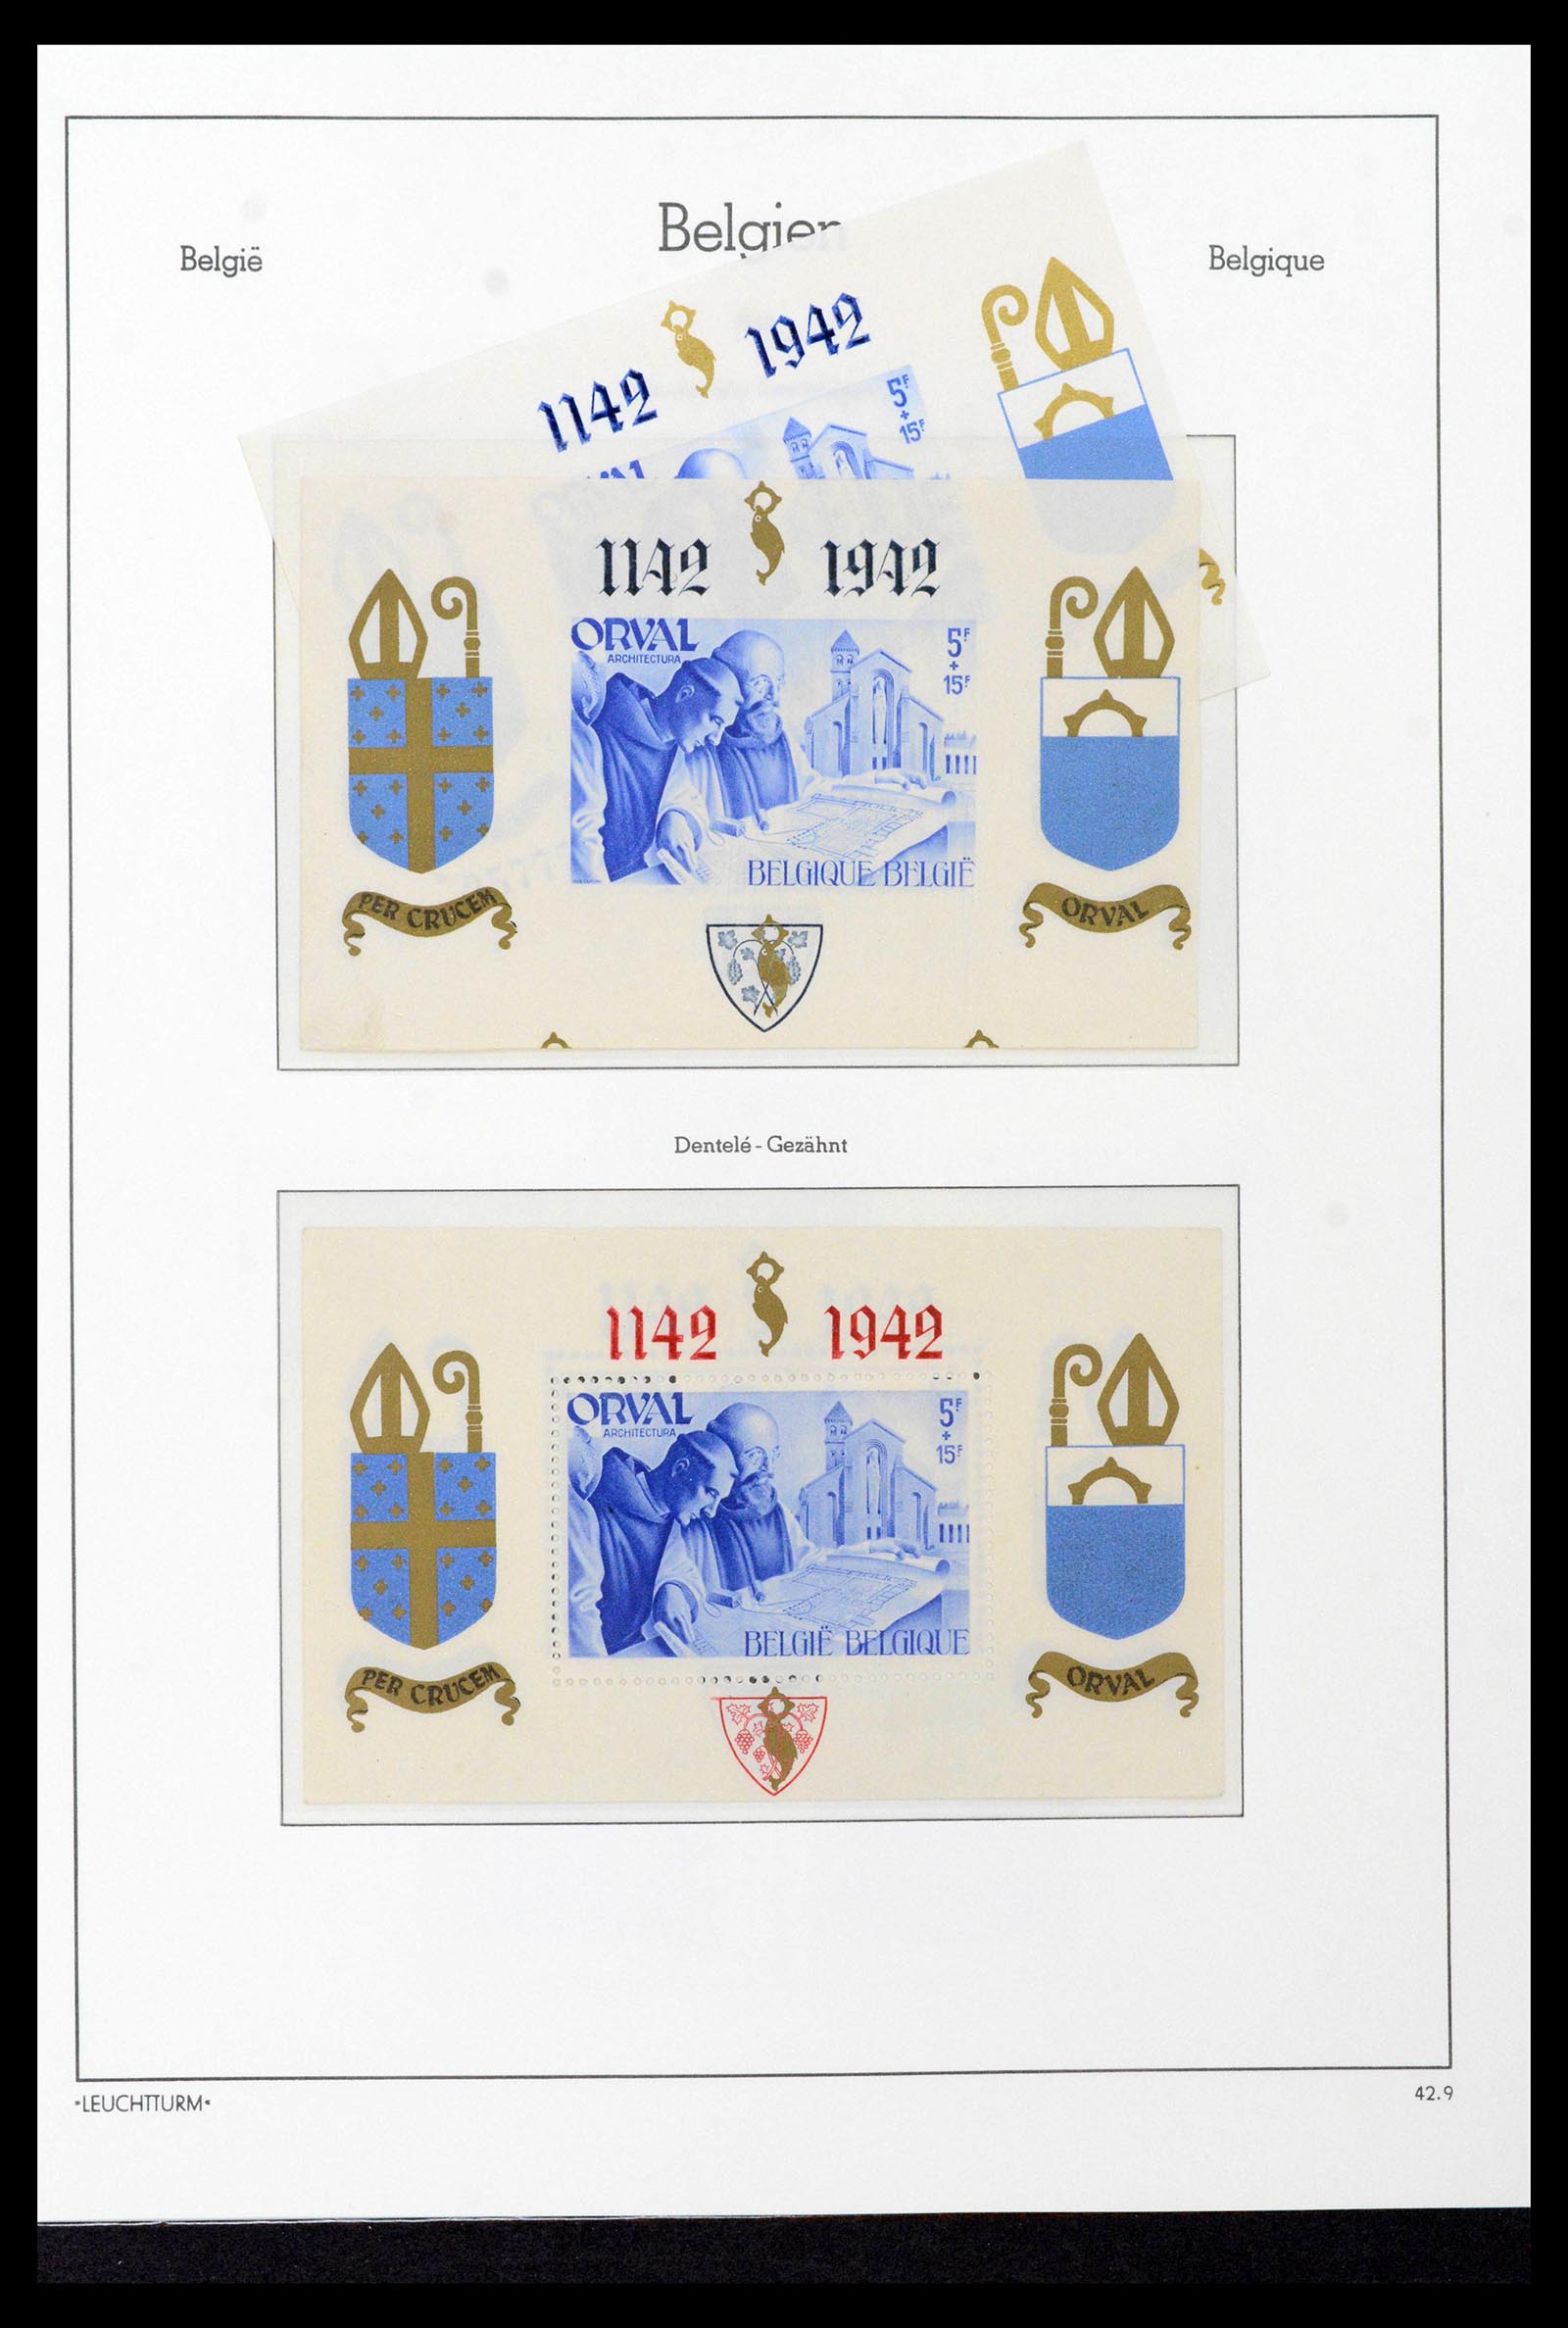 39137 0092 - Stamp collection 39137 Belgium 1849-2002.